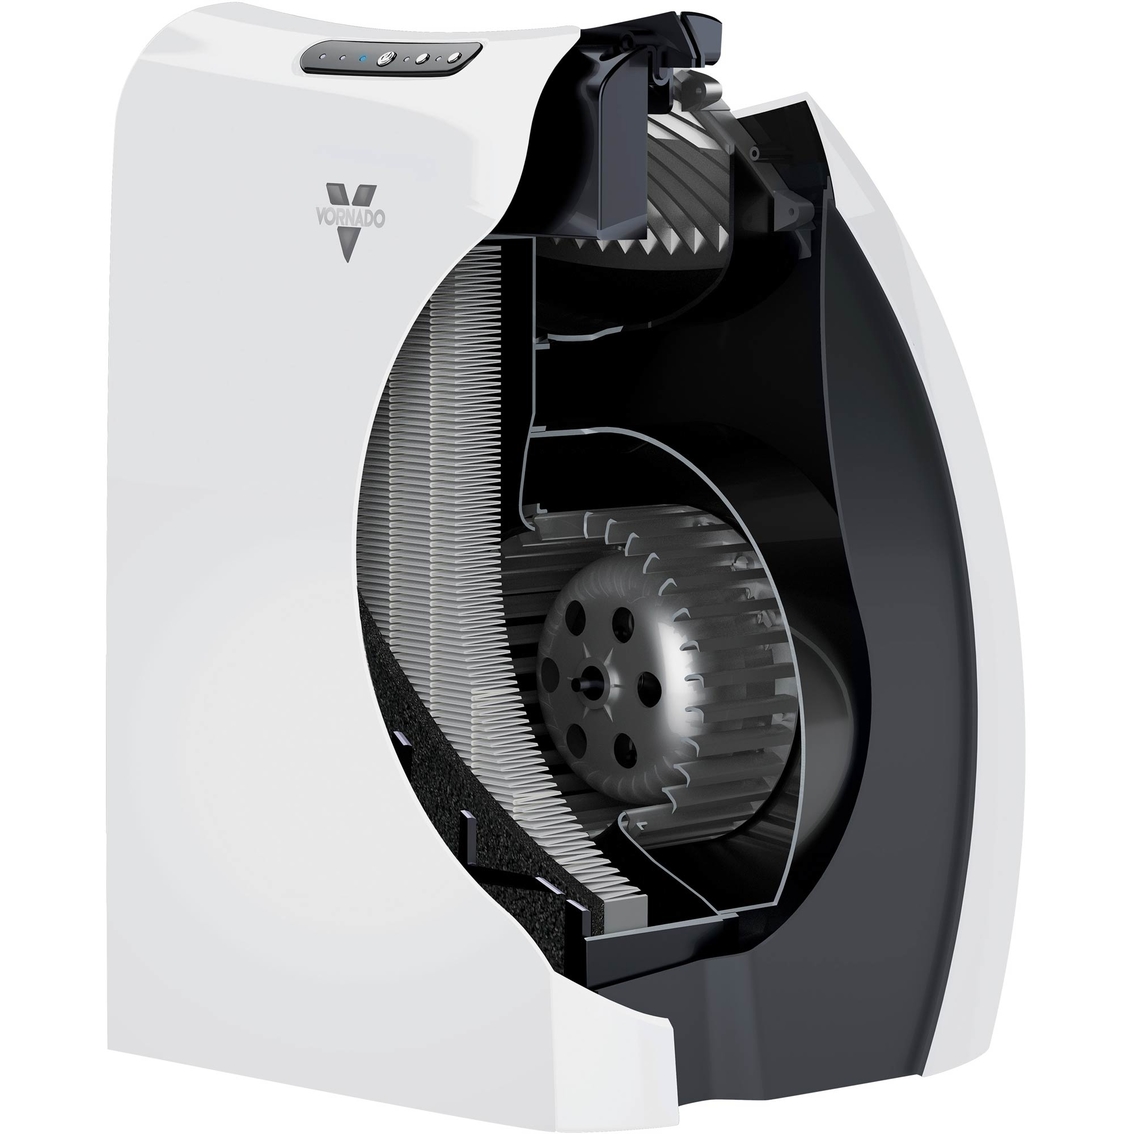 Vornado AC350 True HEPA Whole Room Air Purifier - Image 2 of 2